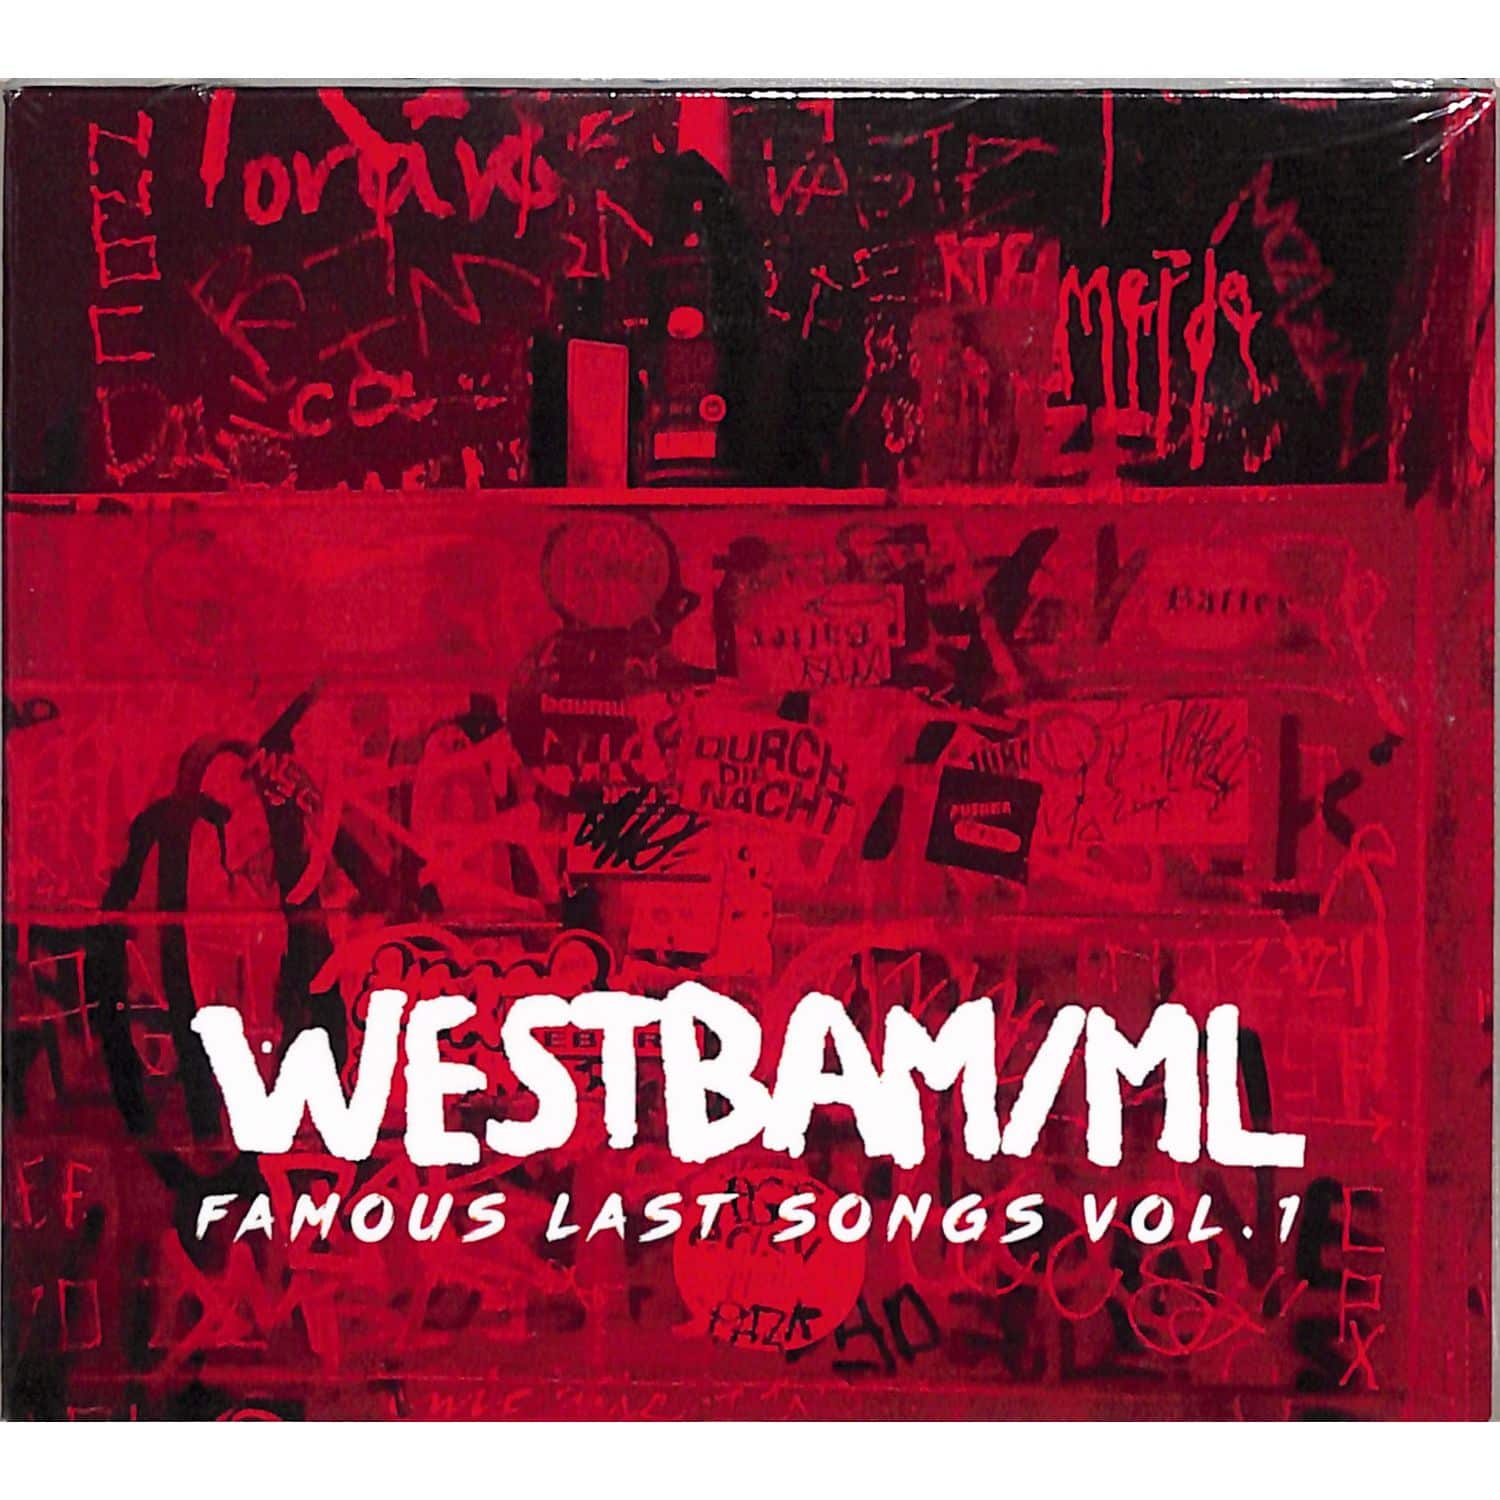 Westbam/ML - FAMOUS LAST SONGS VOL.1 